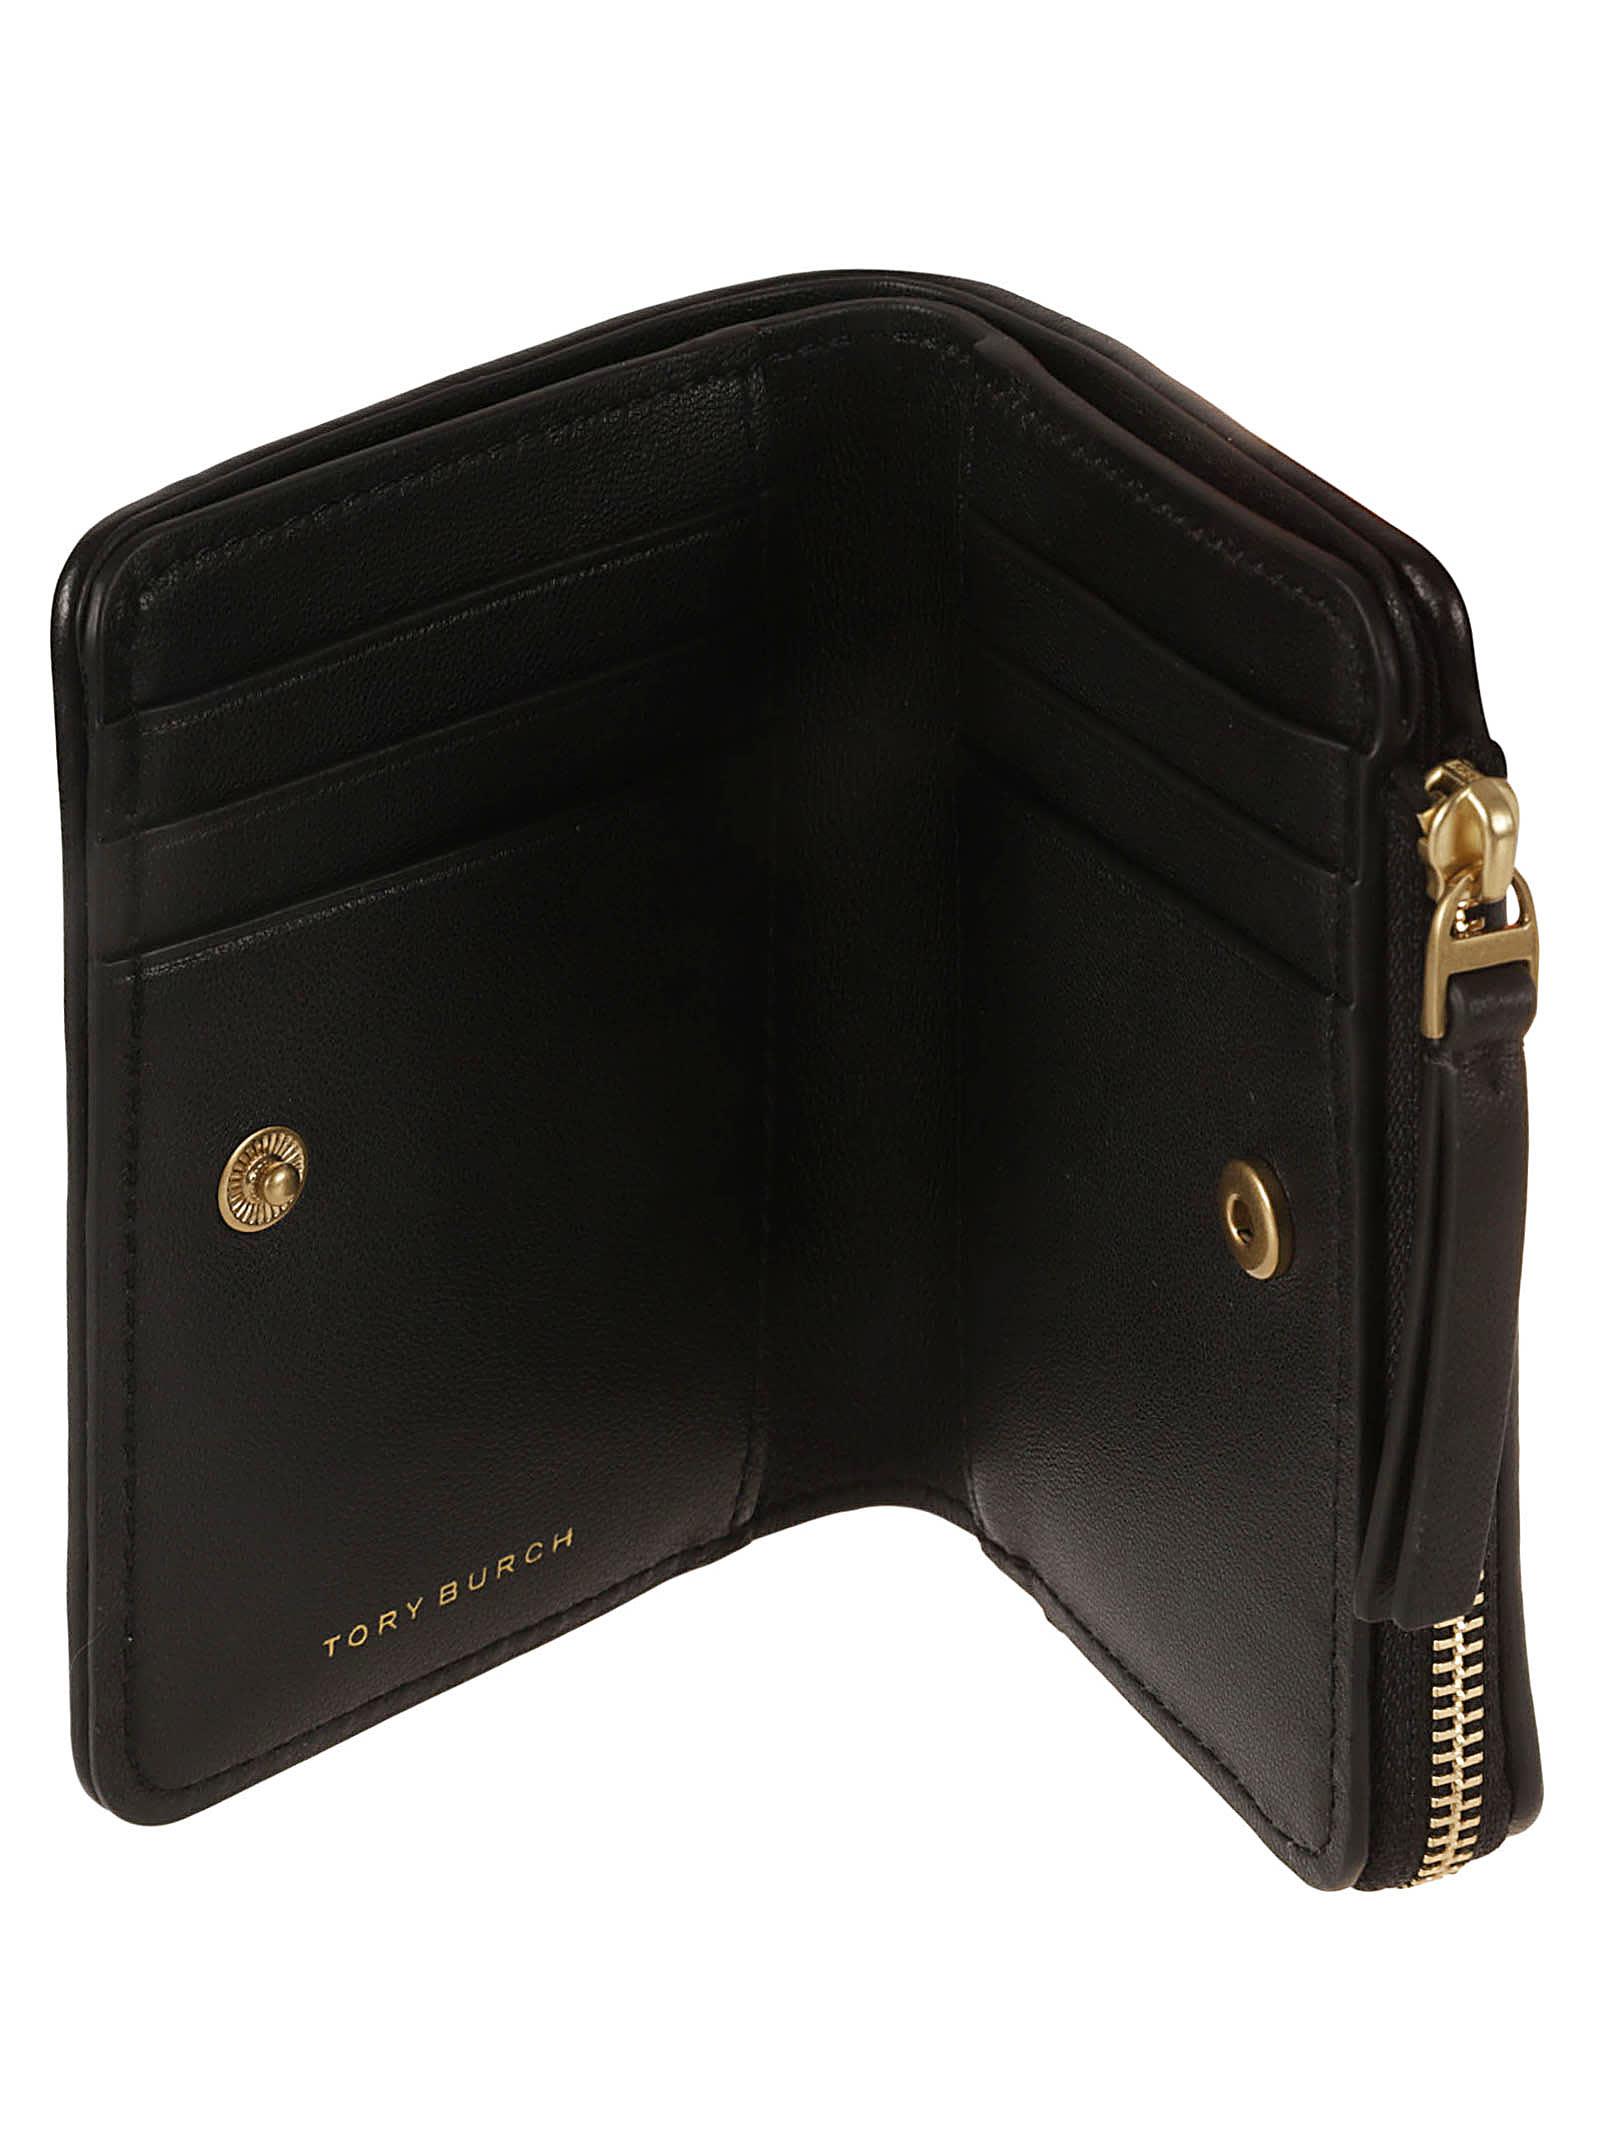  Tory Burch Women's Kira Chevron Bi-Fold Wallet, Black, One Size  : Clothing, Shoes & Jewelry